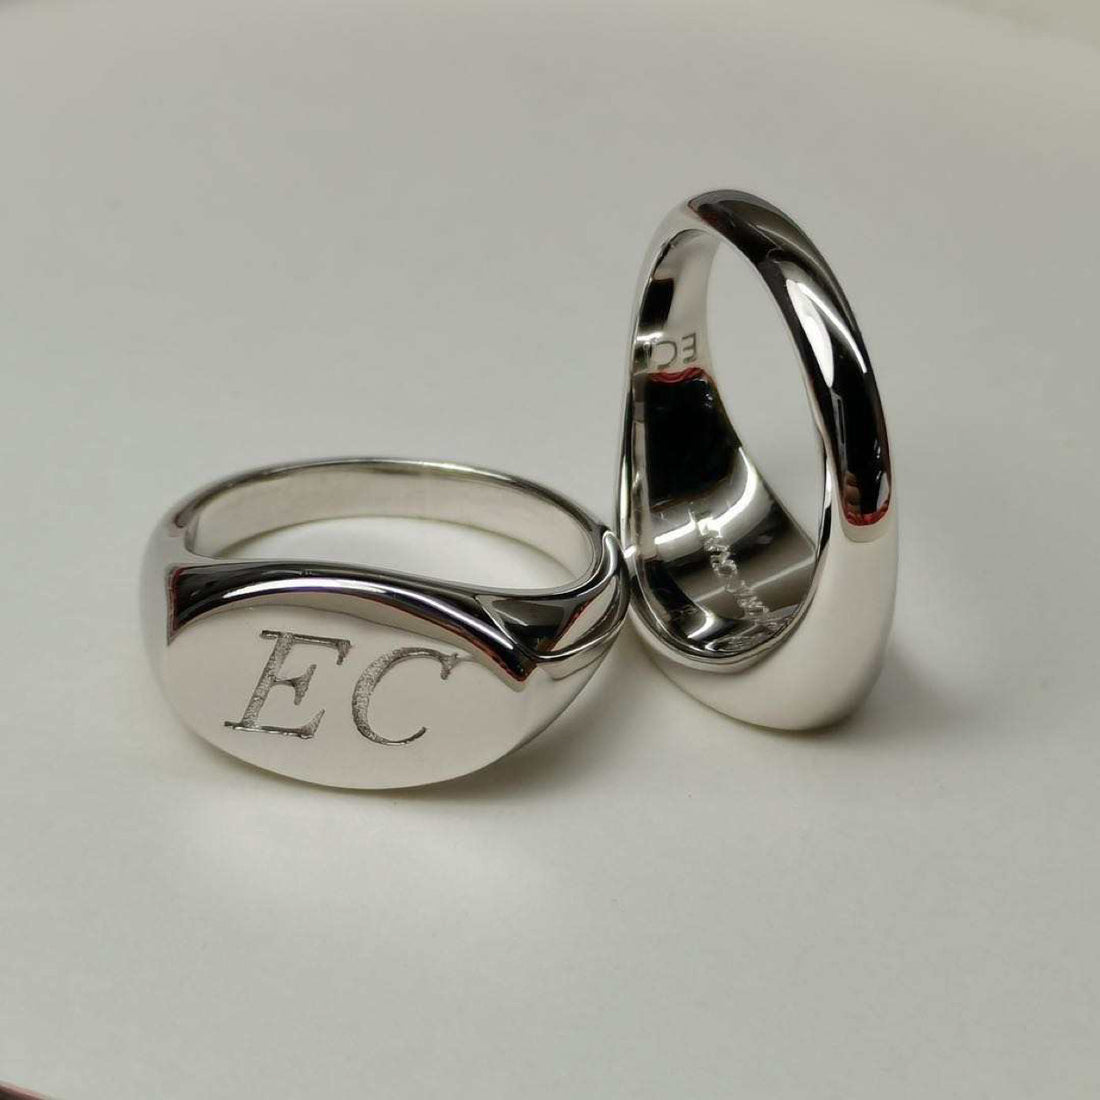 The 'EC' Signet Ring